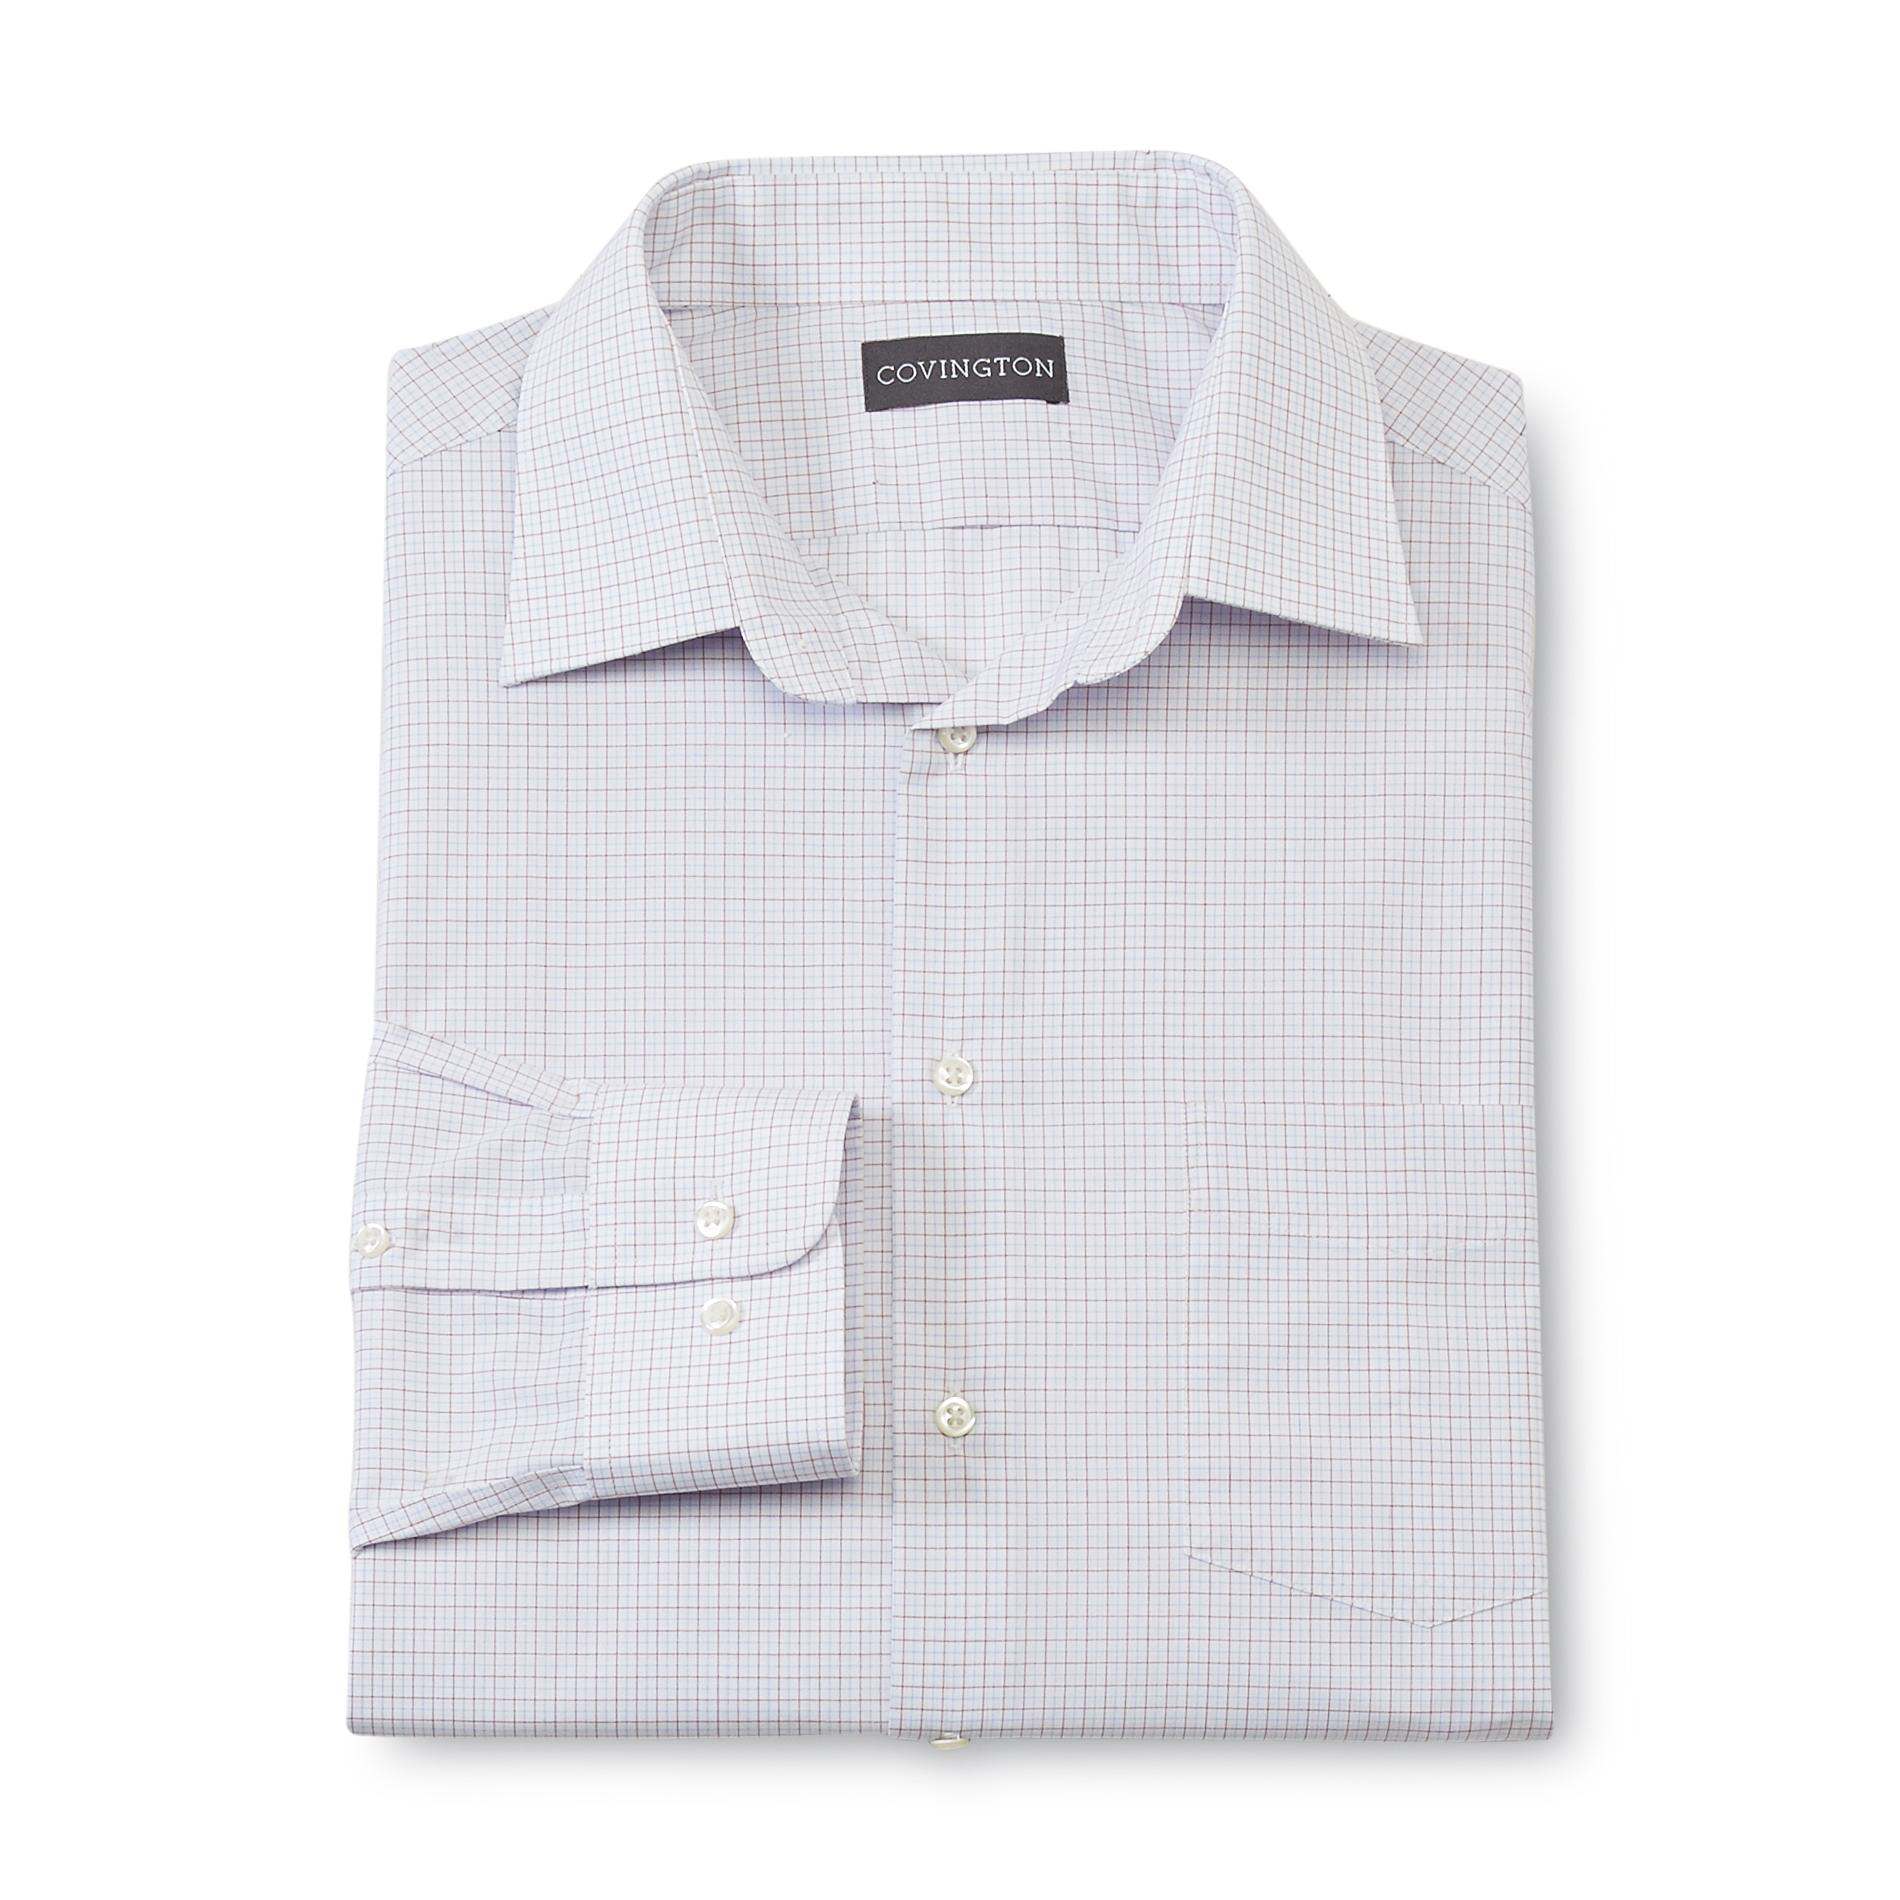 Covington Men's Oxford Dress Shirt - Grid